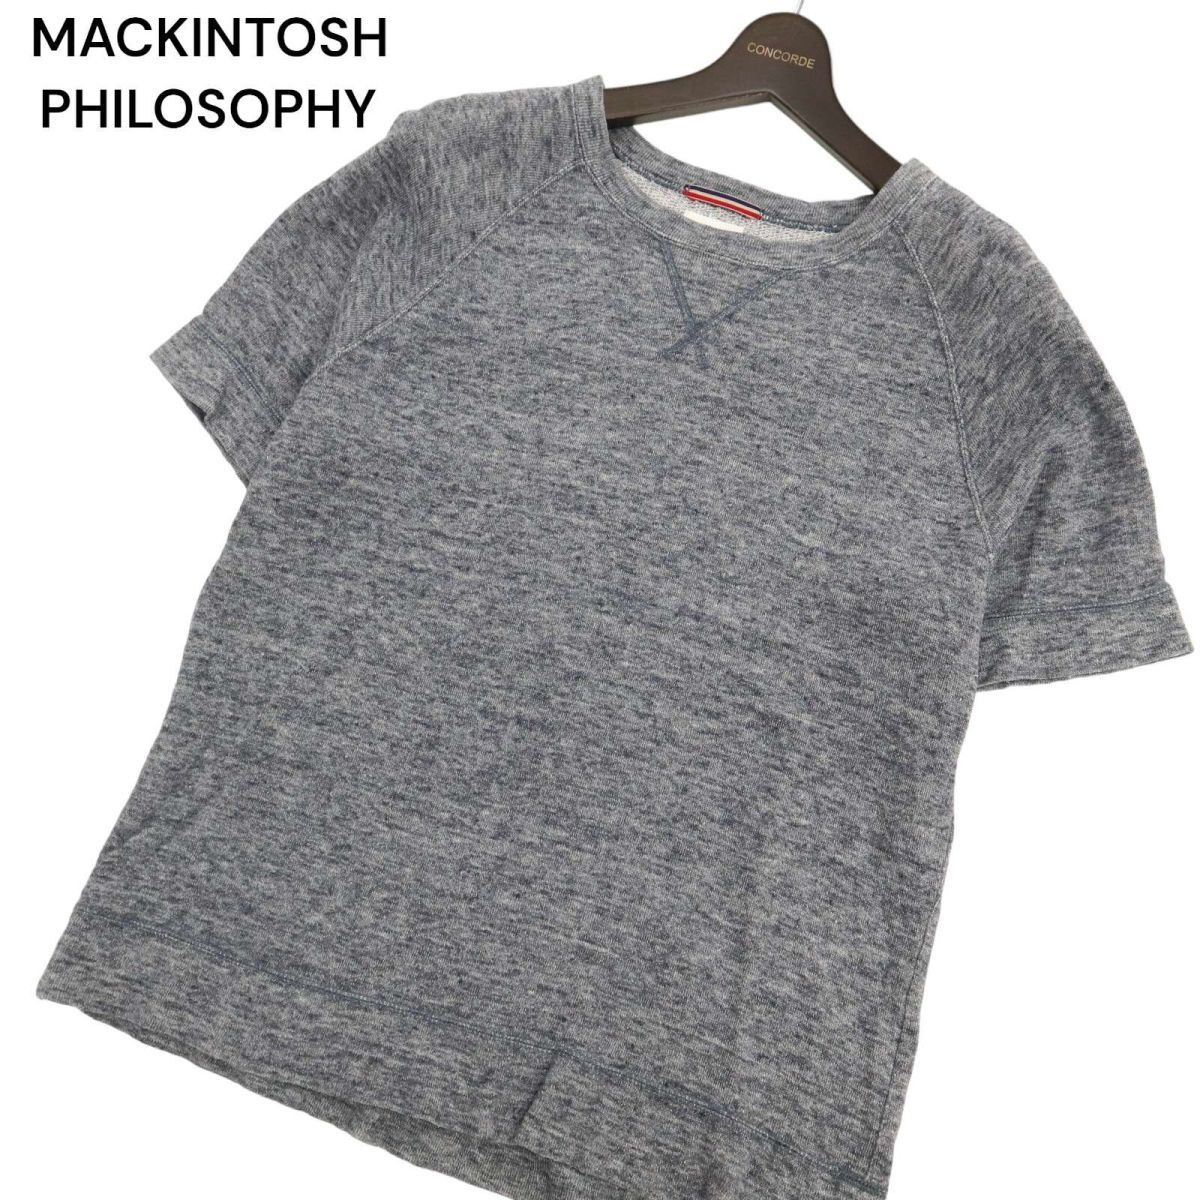 MACKINTOSH PHILOSOPHY Macintosh firosofi- короткий рукав [ лен linen] тренировочный cut and sewn футболка Sz.40 мужской C4T03471_4#G